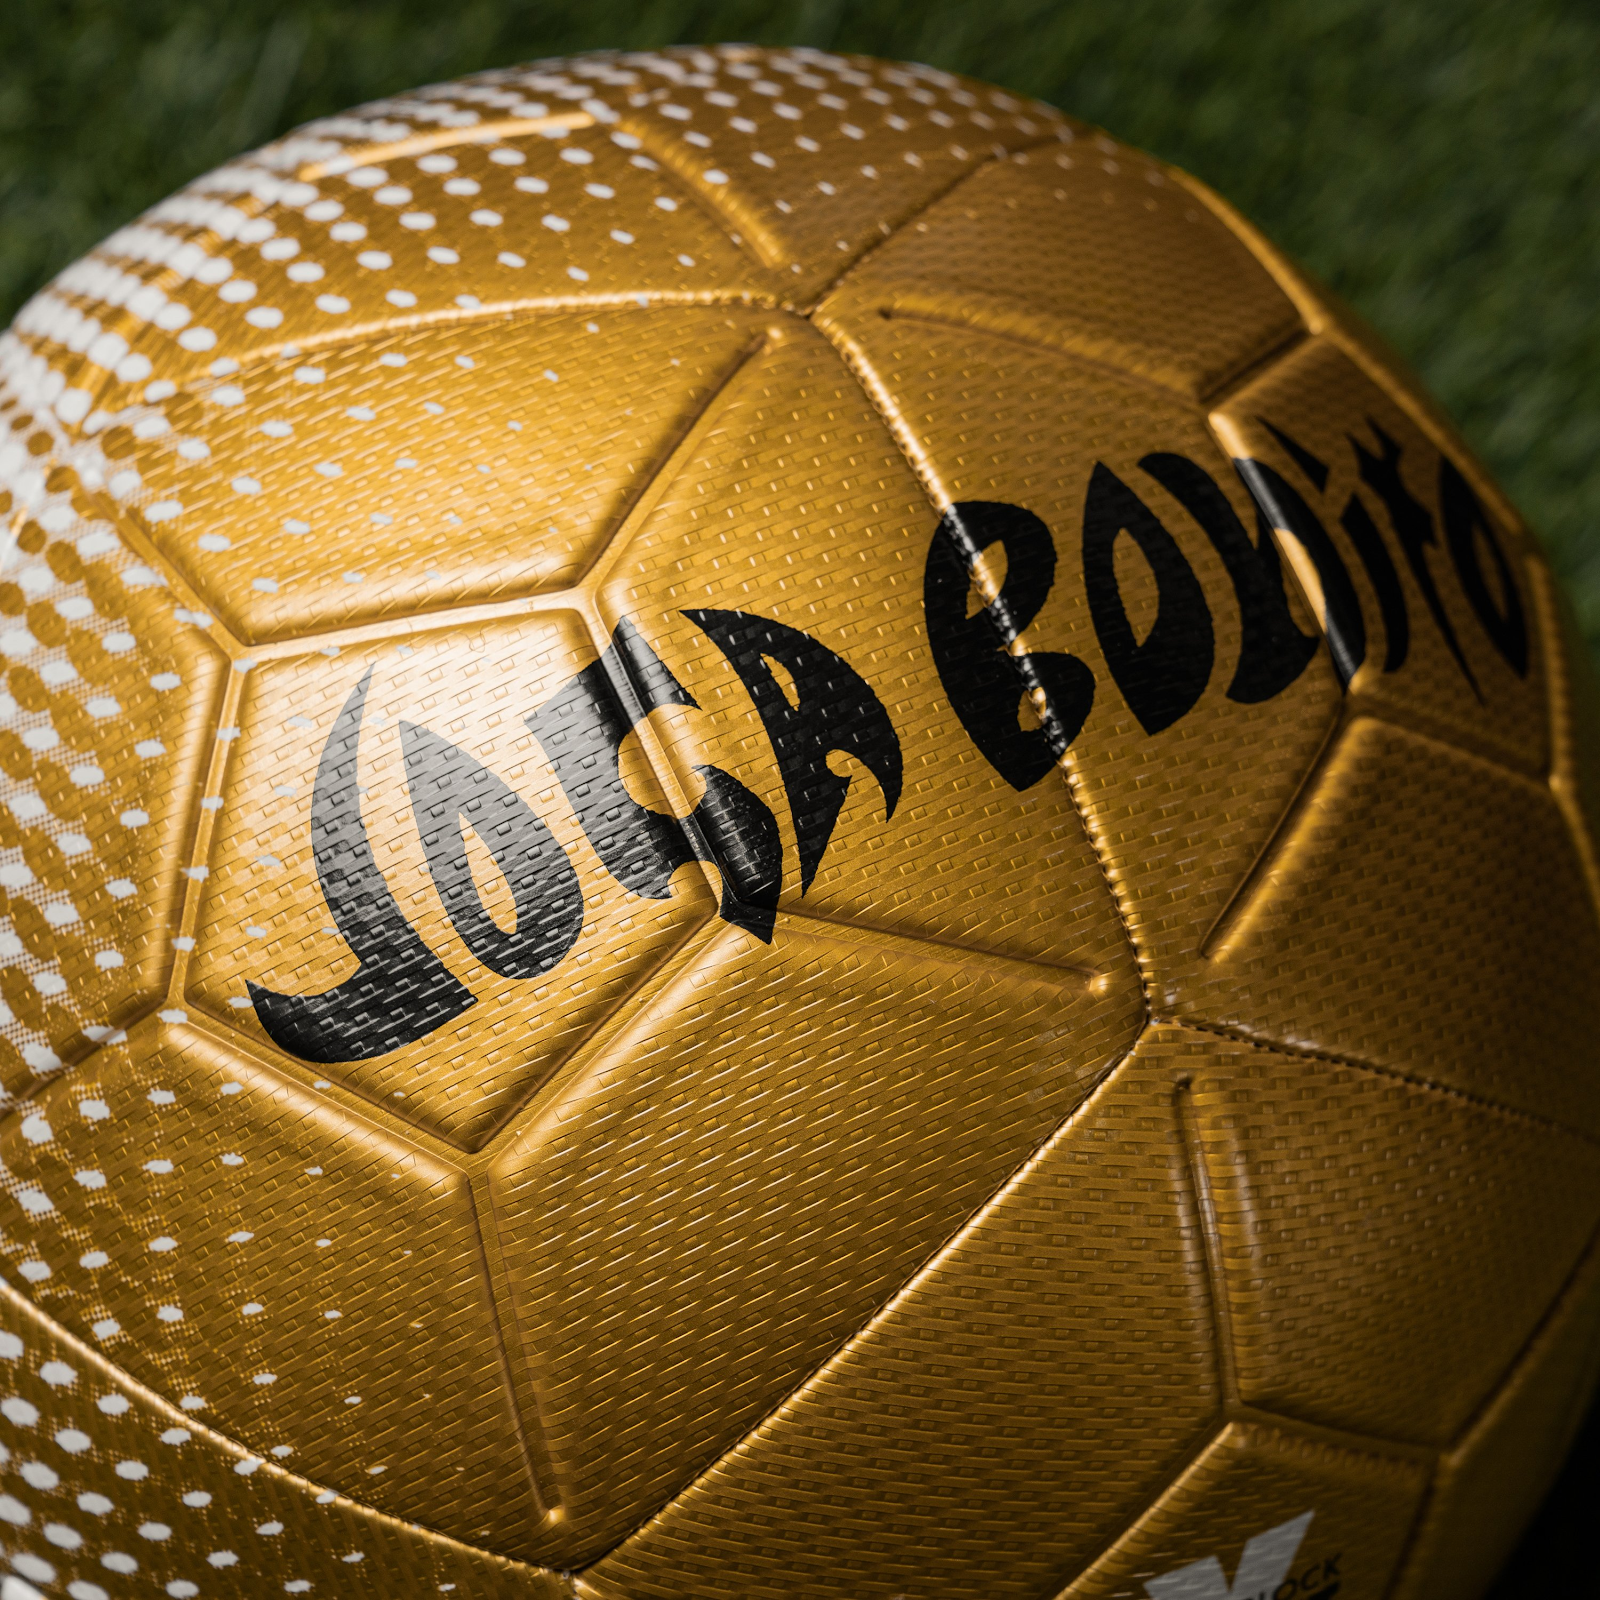 Nike Airlock Street X Joga Bonito Ball Released - Footy Headlines